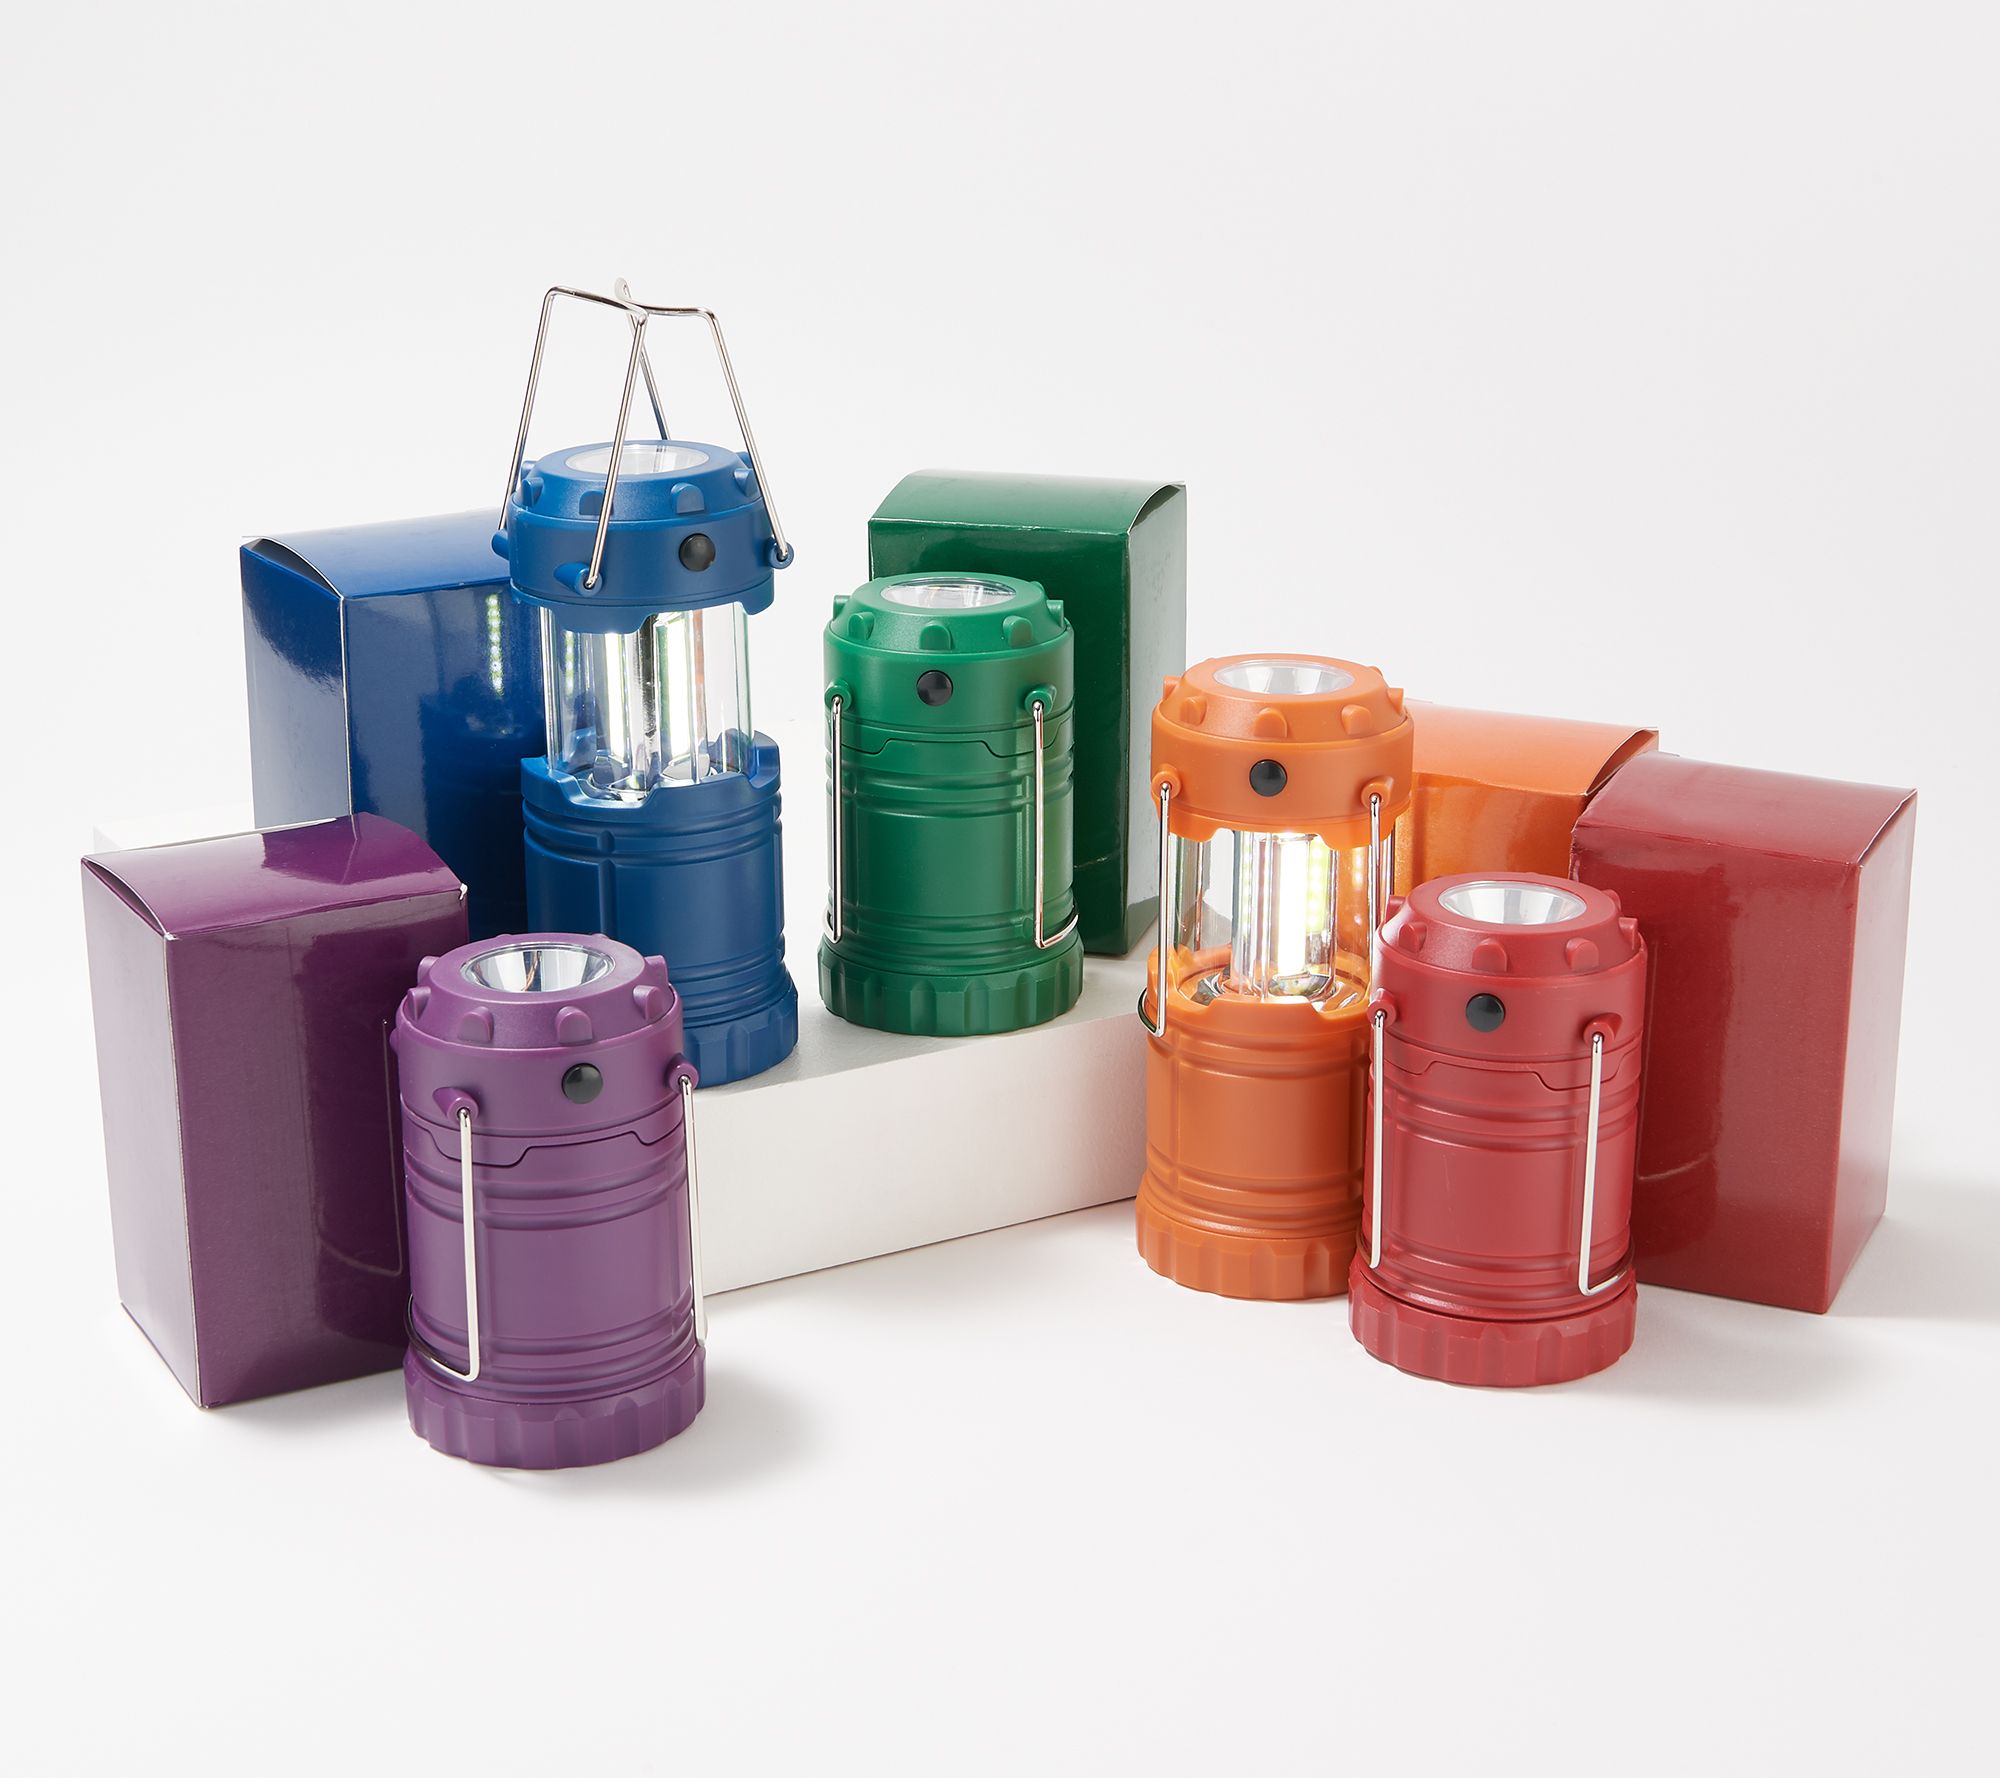 BrightEase Set of 5 Mini Lantern Flashlights with Gift Boxes 